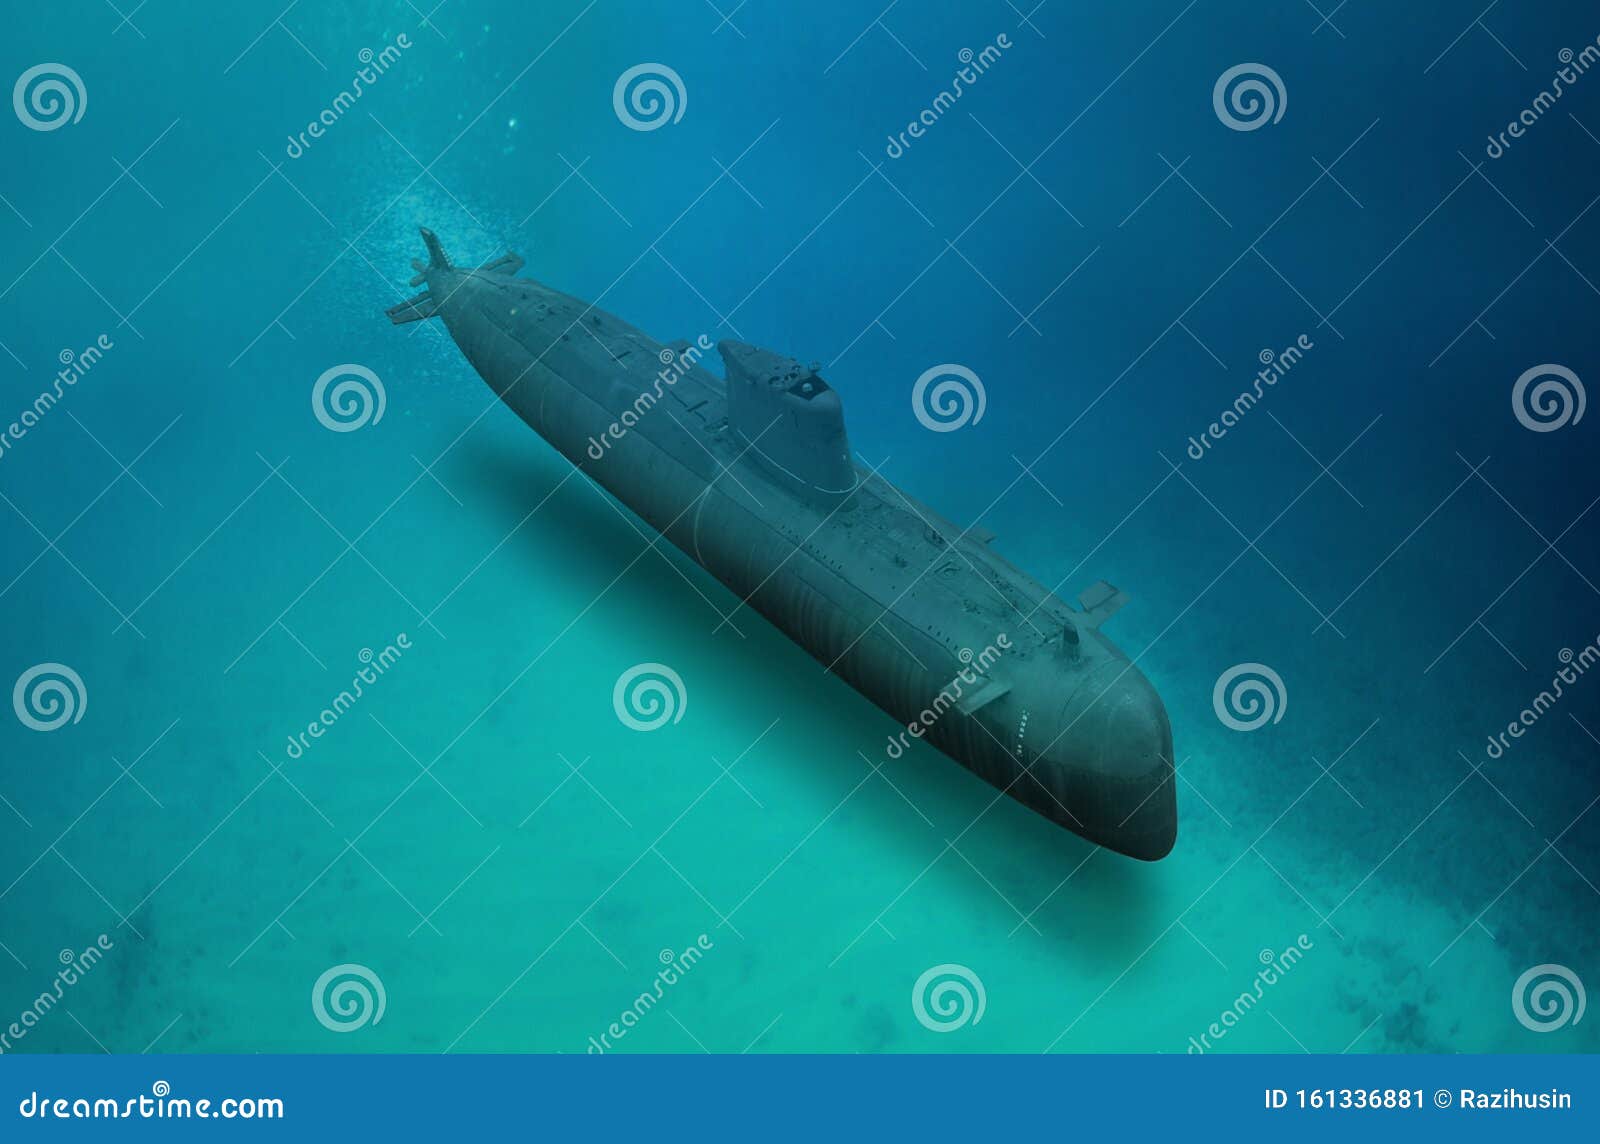 naval submarine submerge underwater during a mission